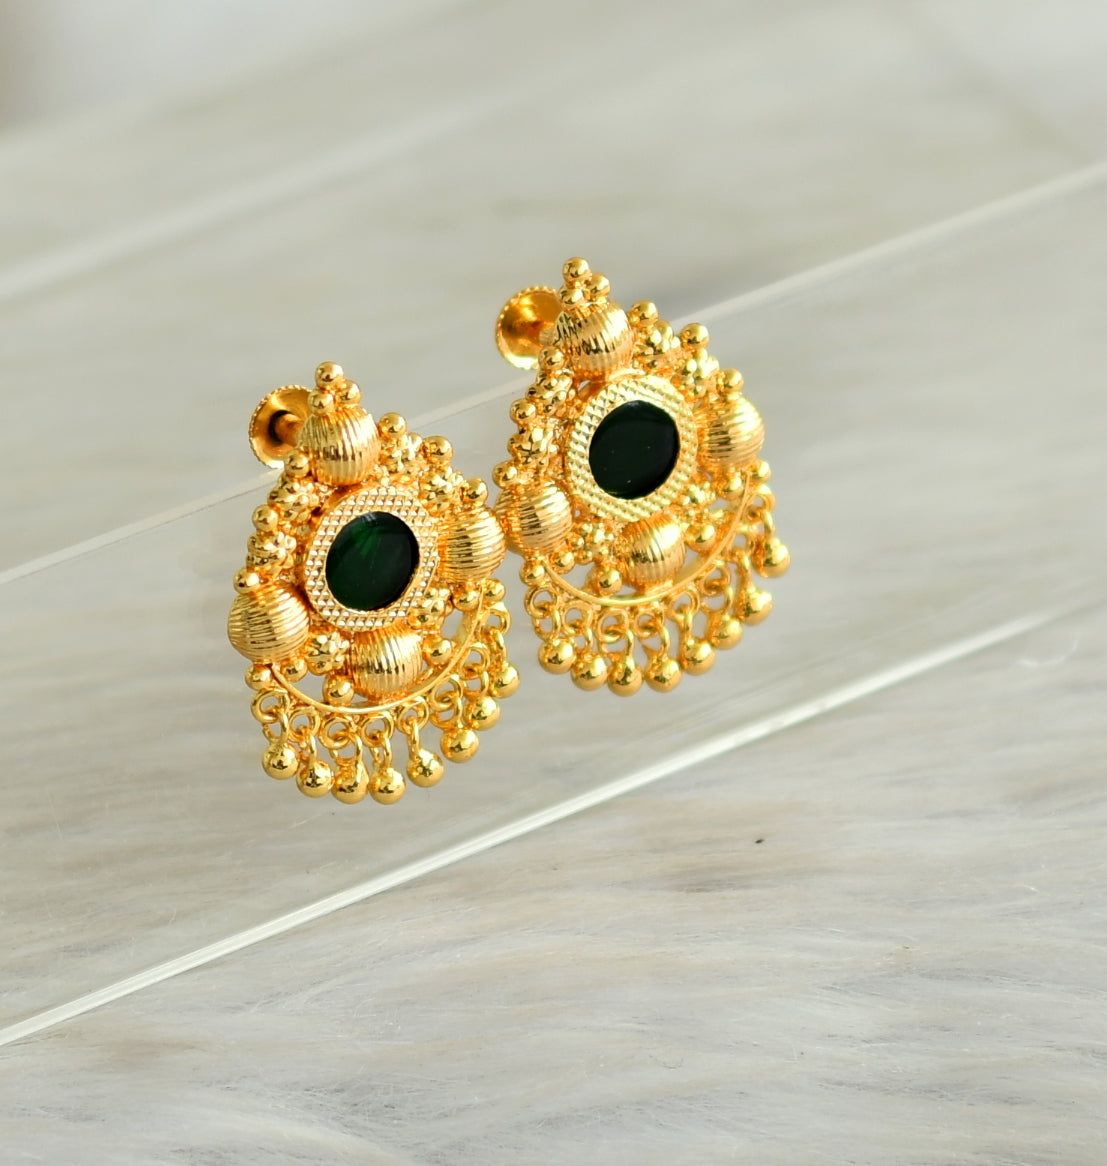 Aggregate more than 91 kerala style earrings